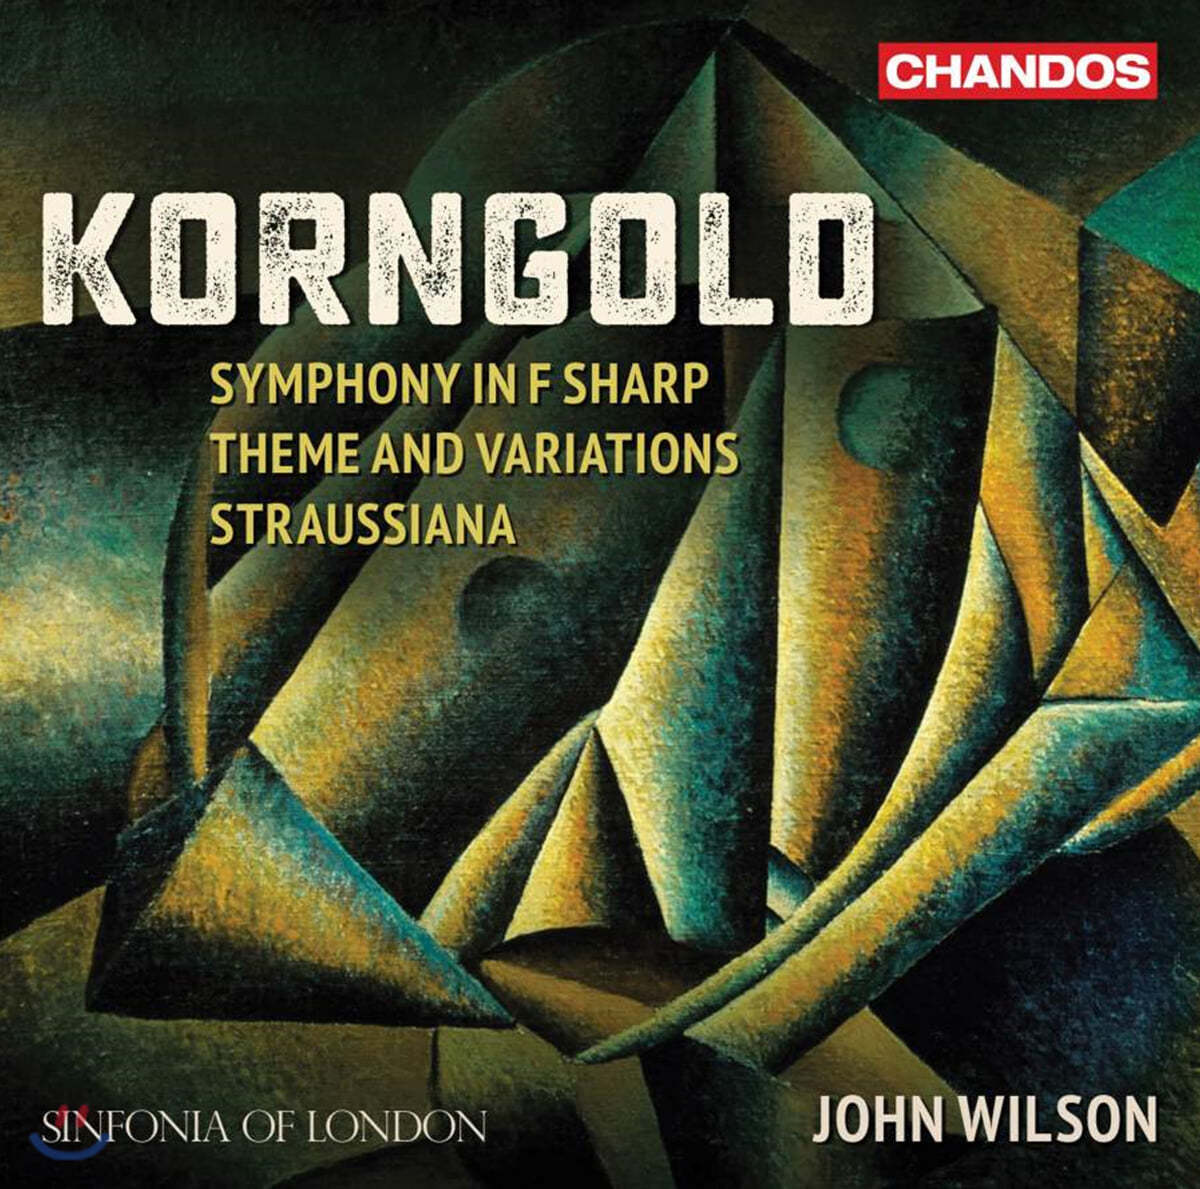 John Wilson 코른골트: 관현악 작품집 (Korngold: Symphony in F sharp, Theme and Variations and Straussiana)